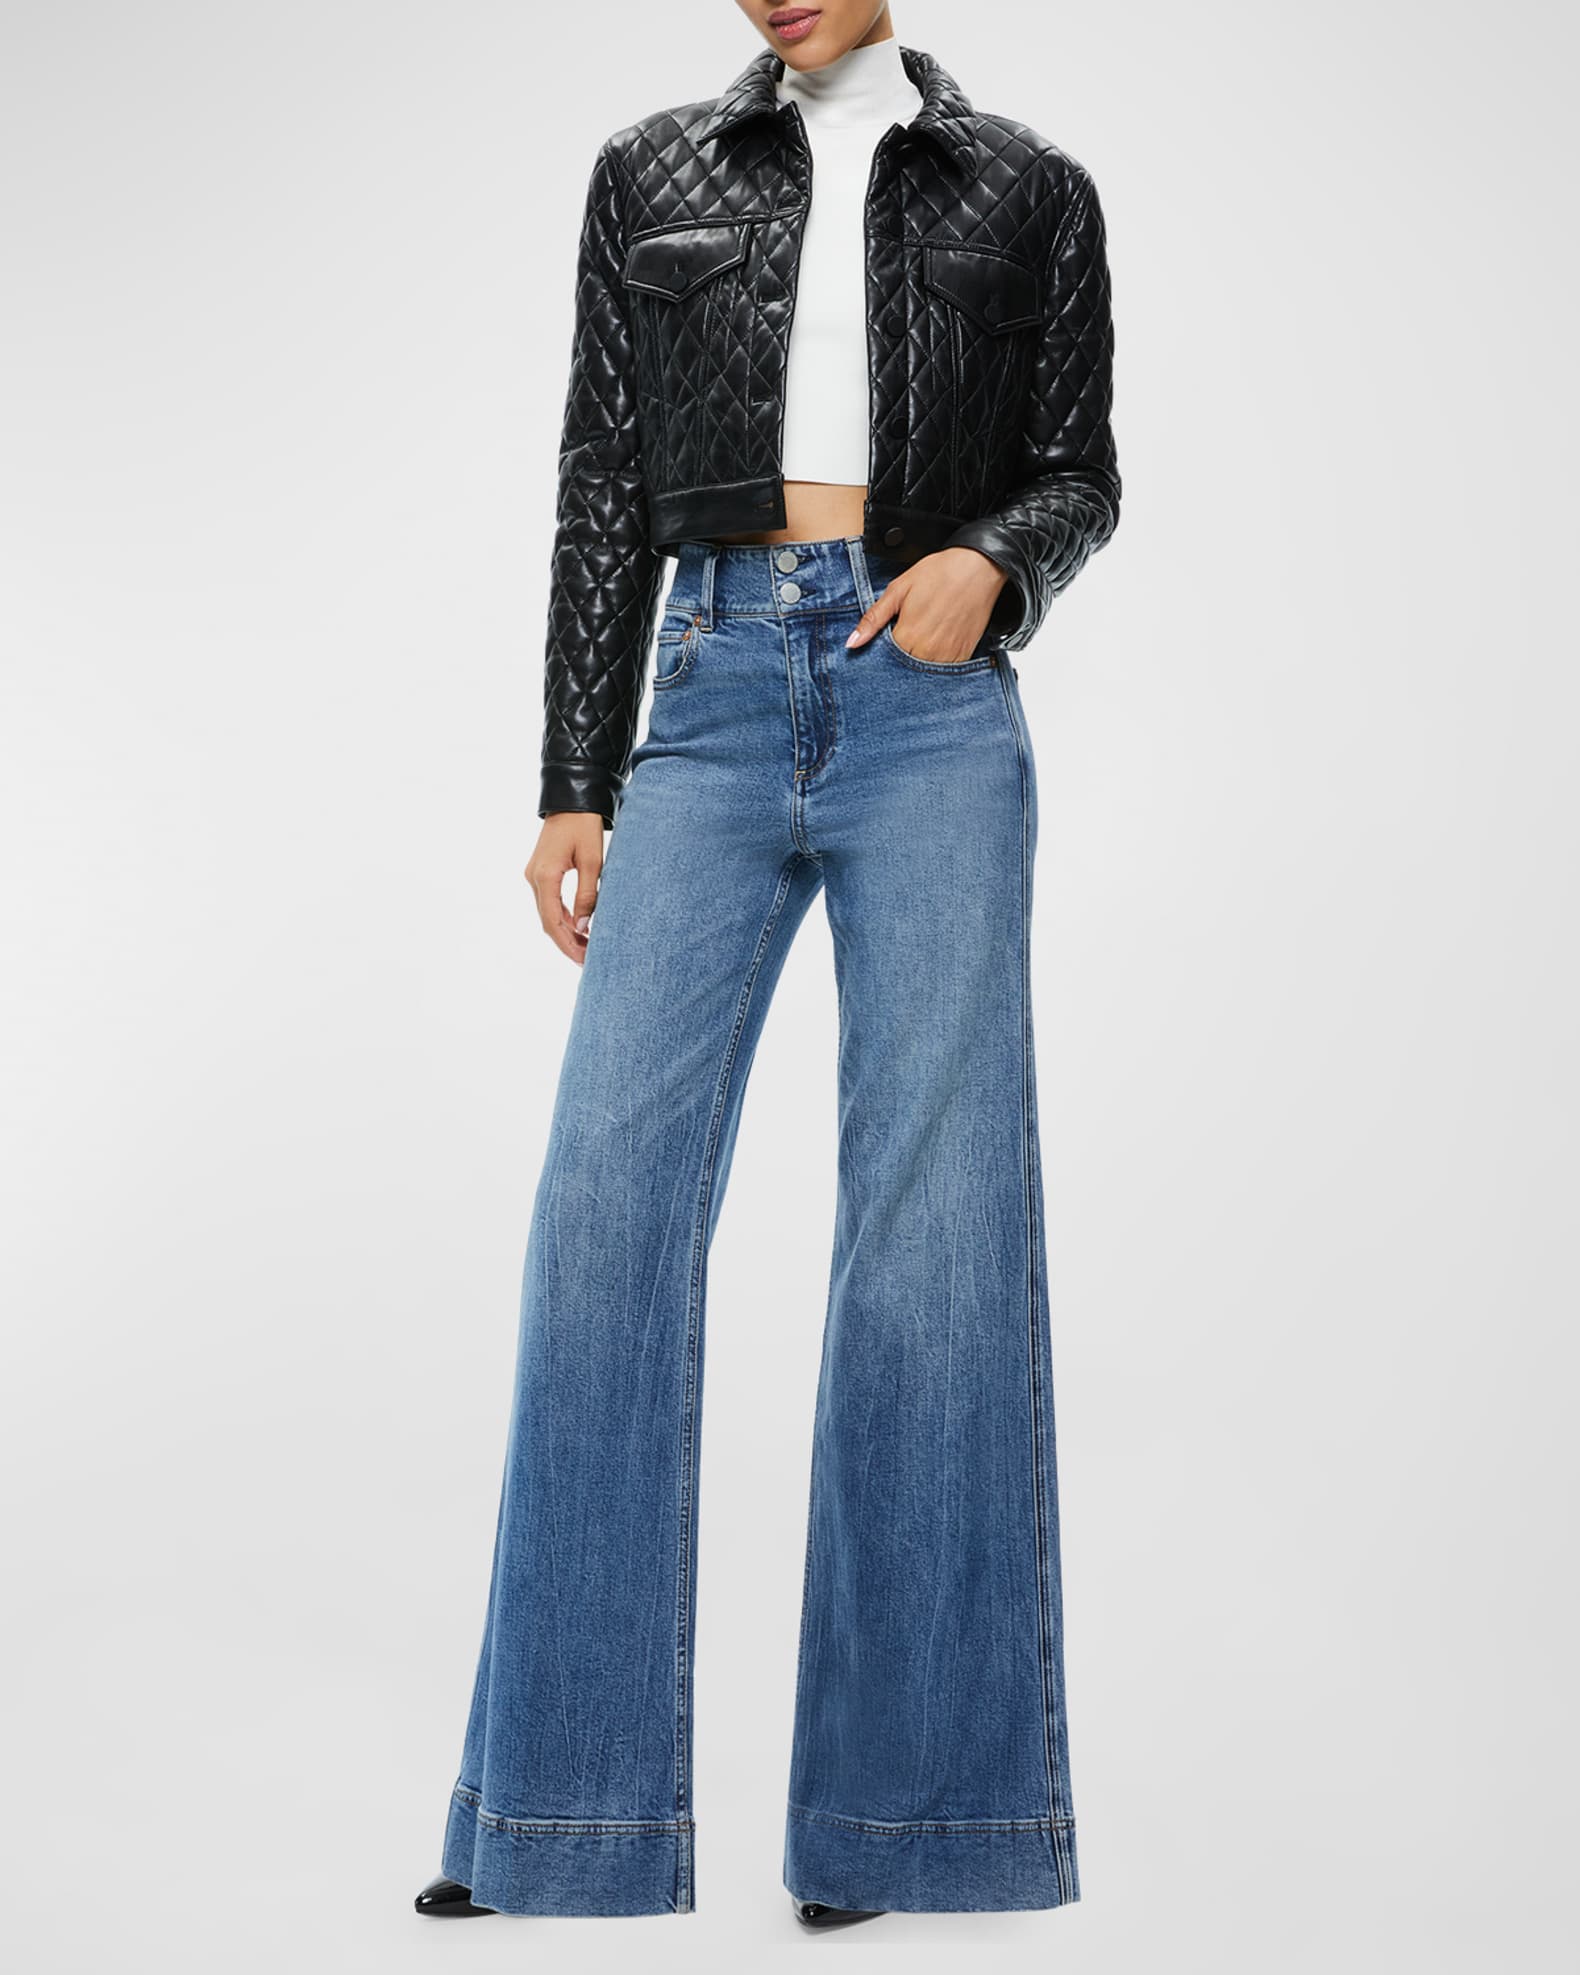 Alice + Olivia Chloe Vegan Leather Quilted Boxy Crop Jacket | Neiman Marcus